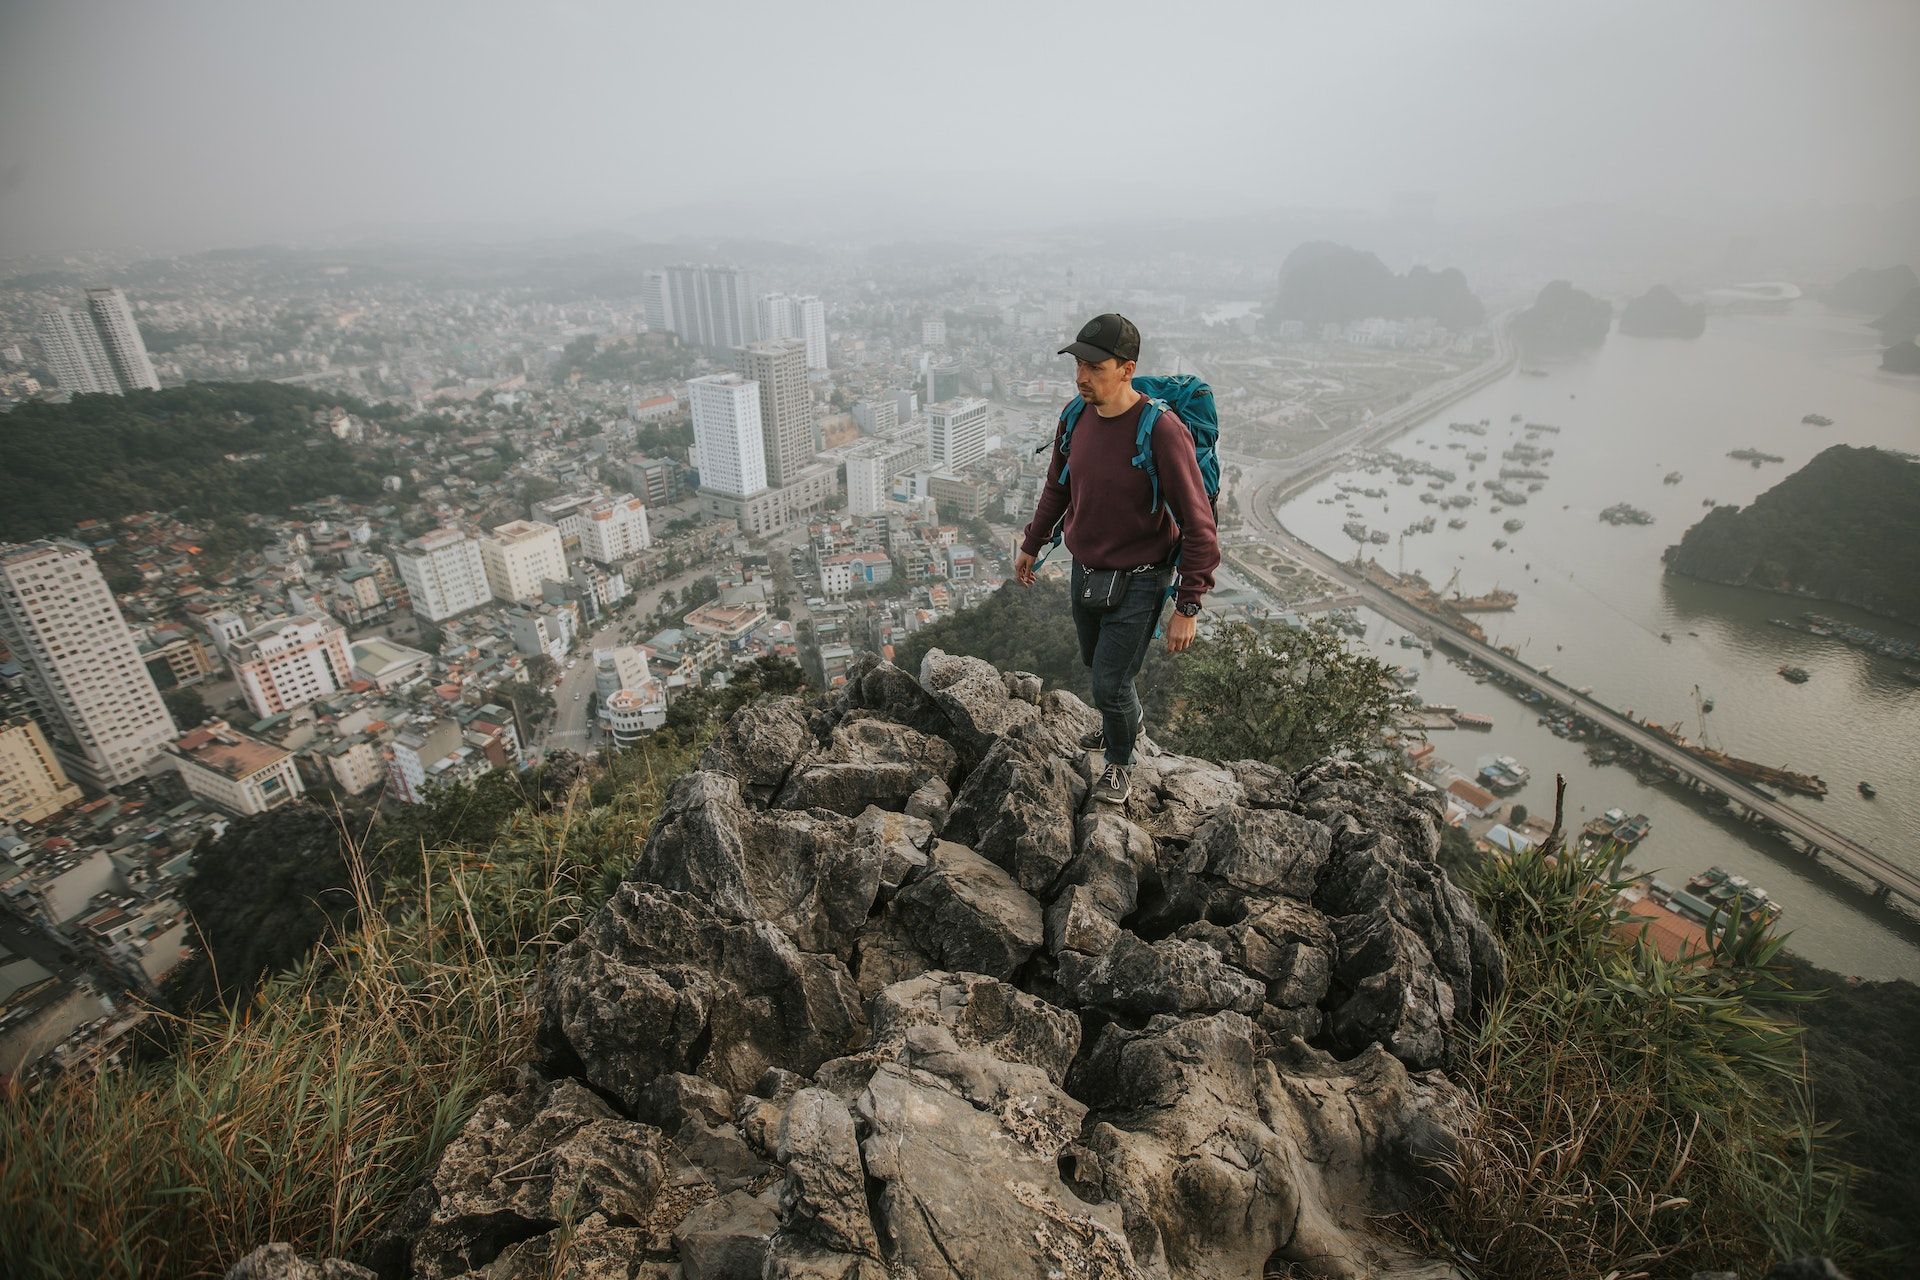 backpacker standing on rocks in Vietnam